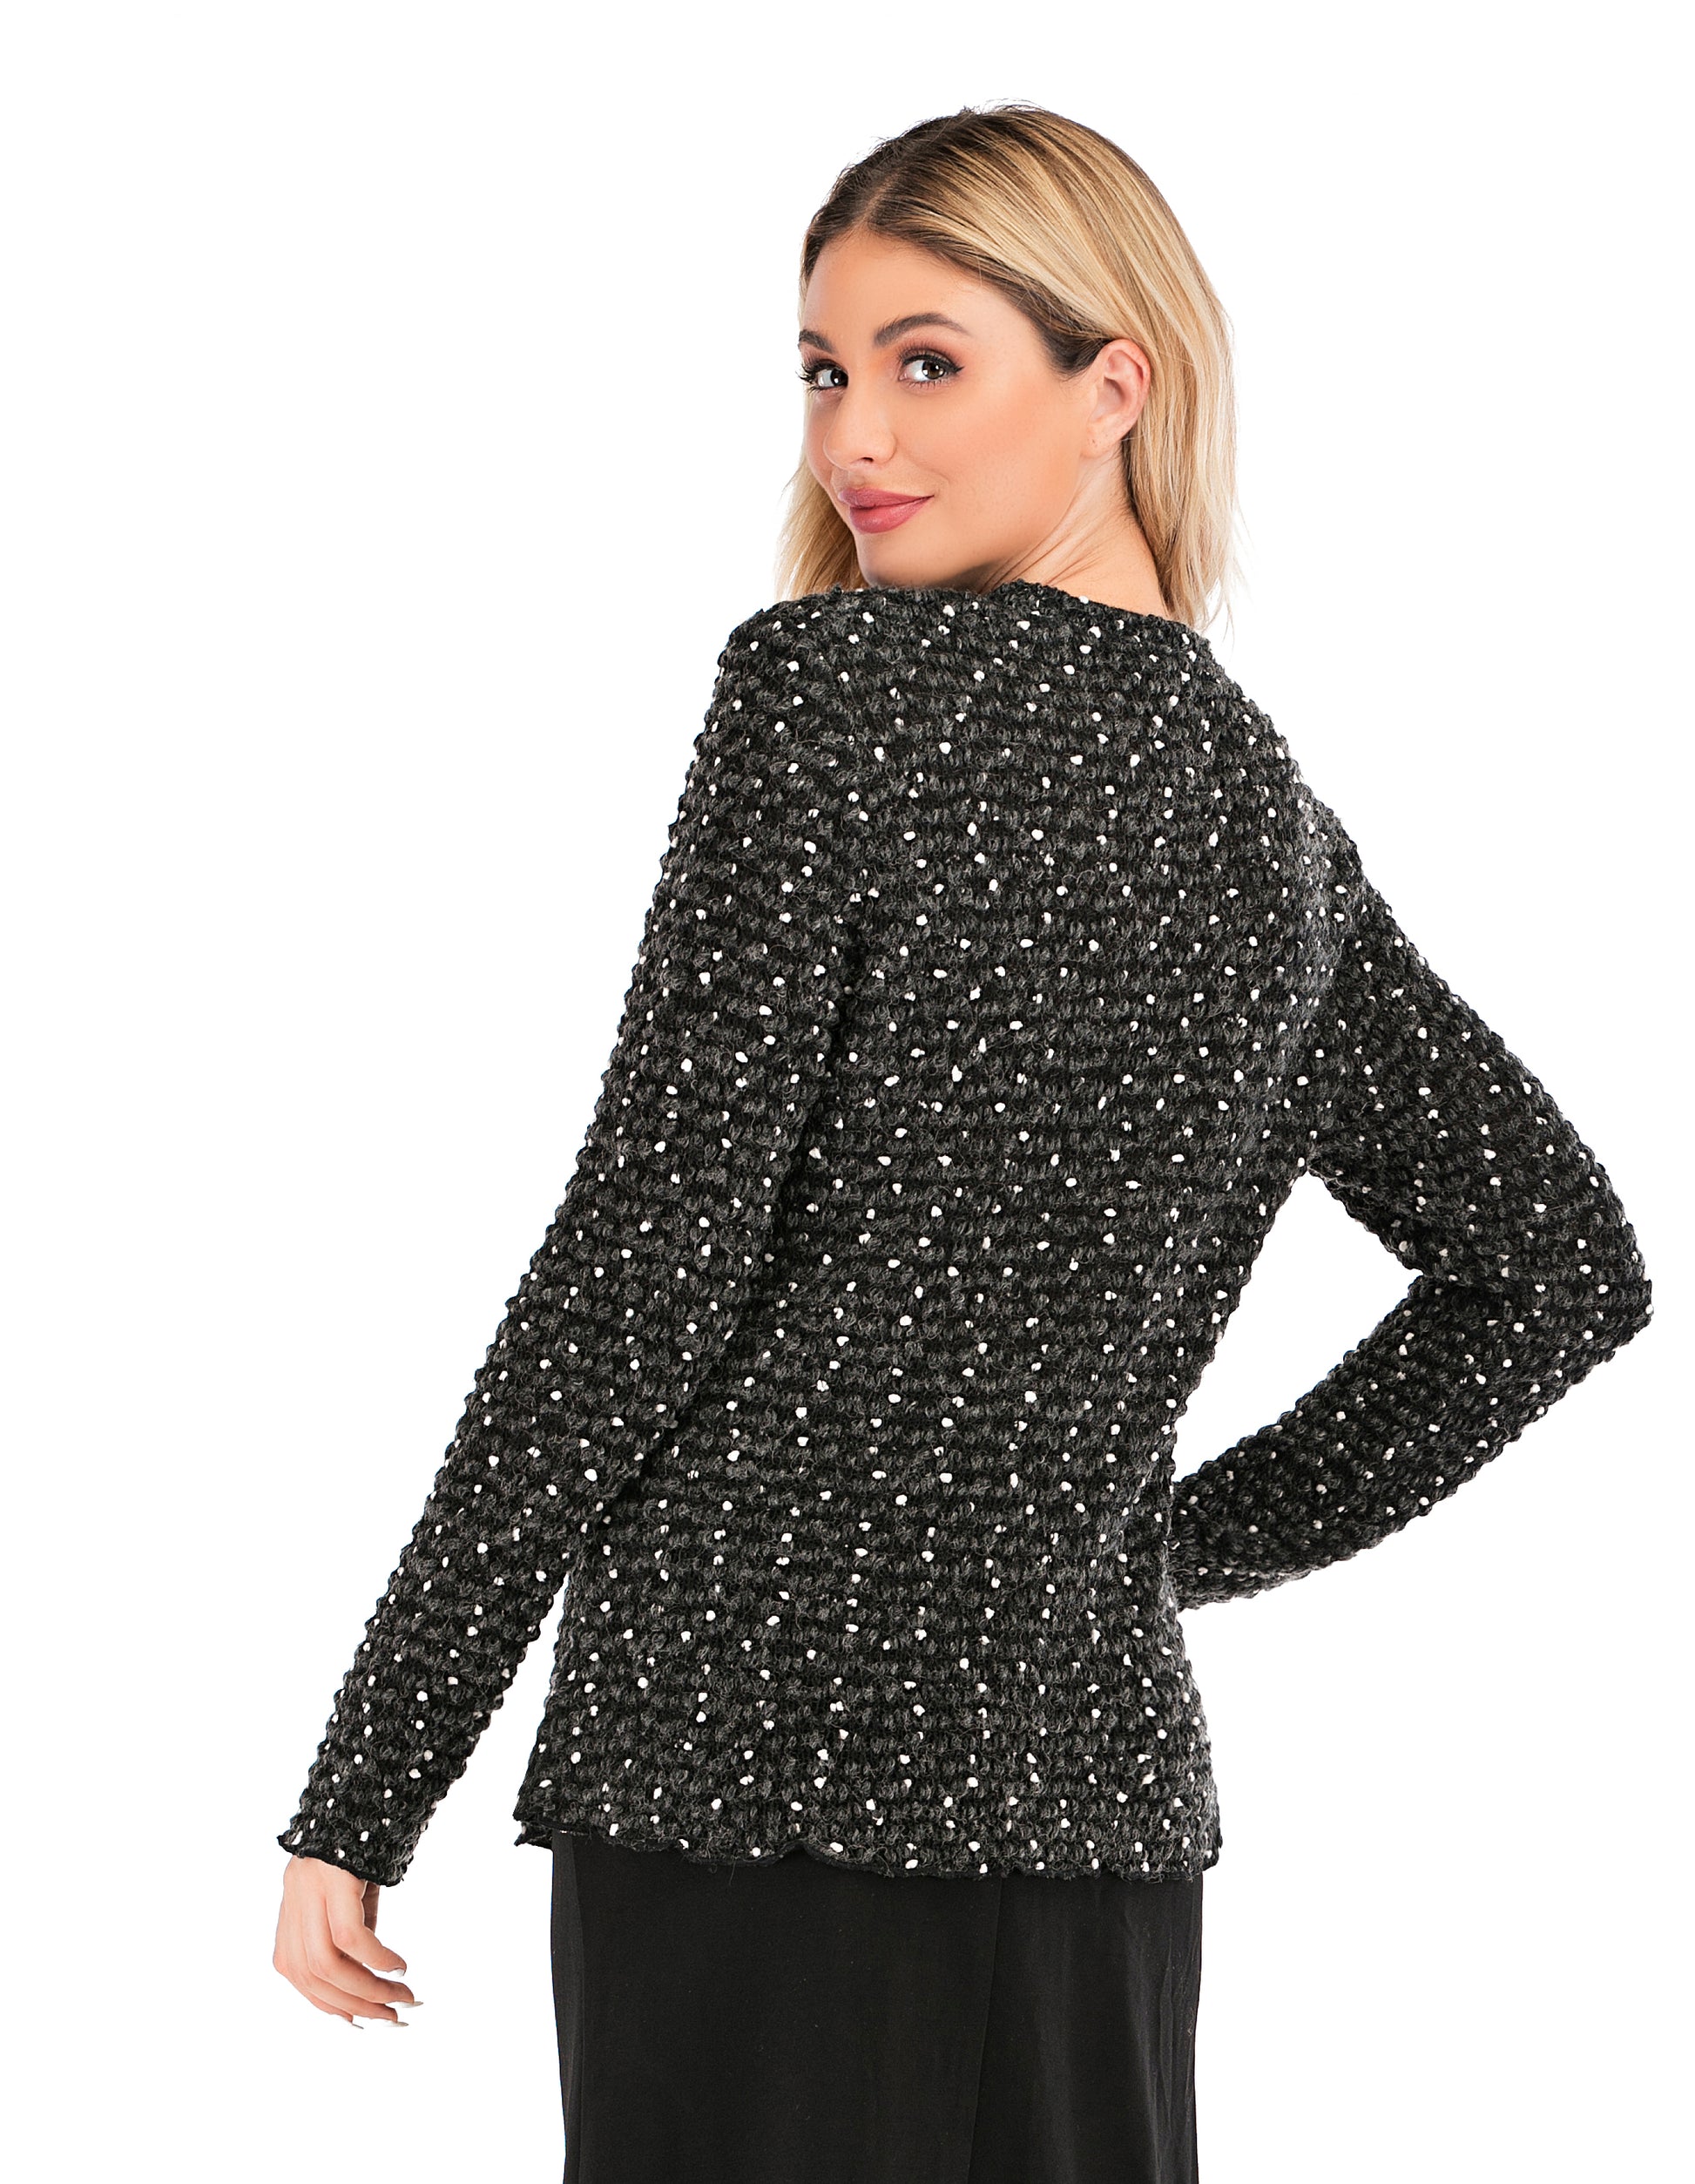 Elegant Black & White Long Sleeve Sweater - MissFinchNYC